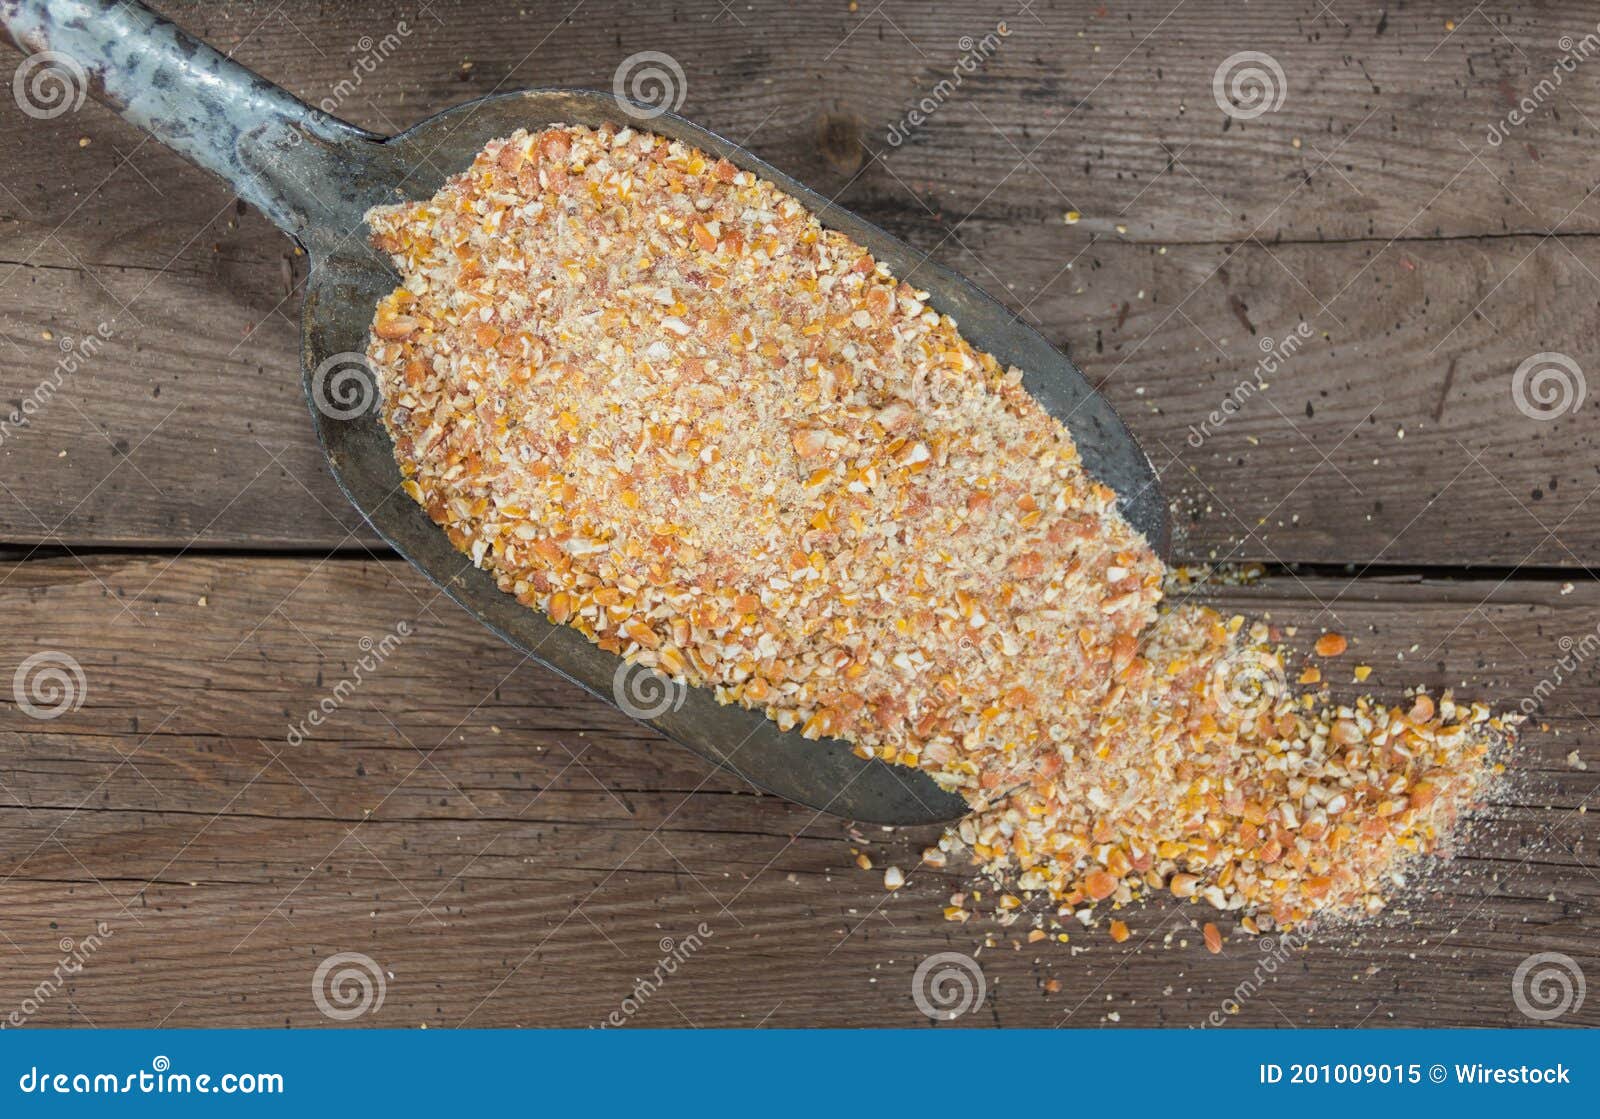 cuchara pala con maiz partido para alimentar animales